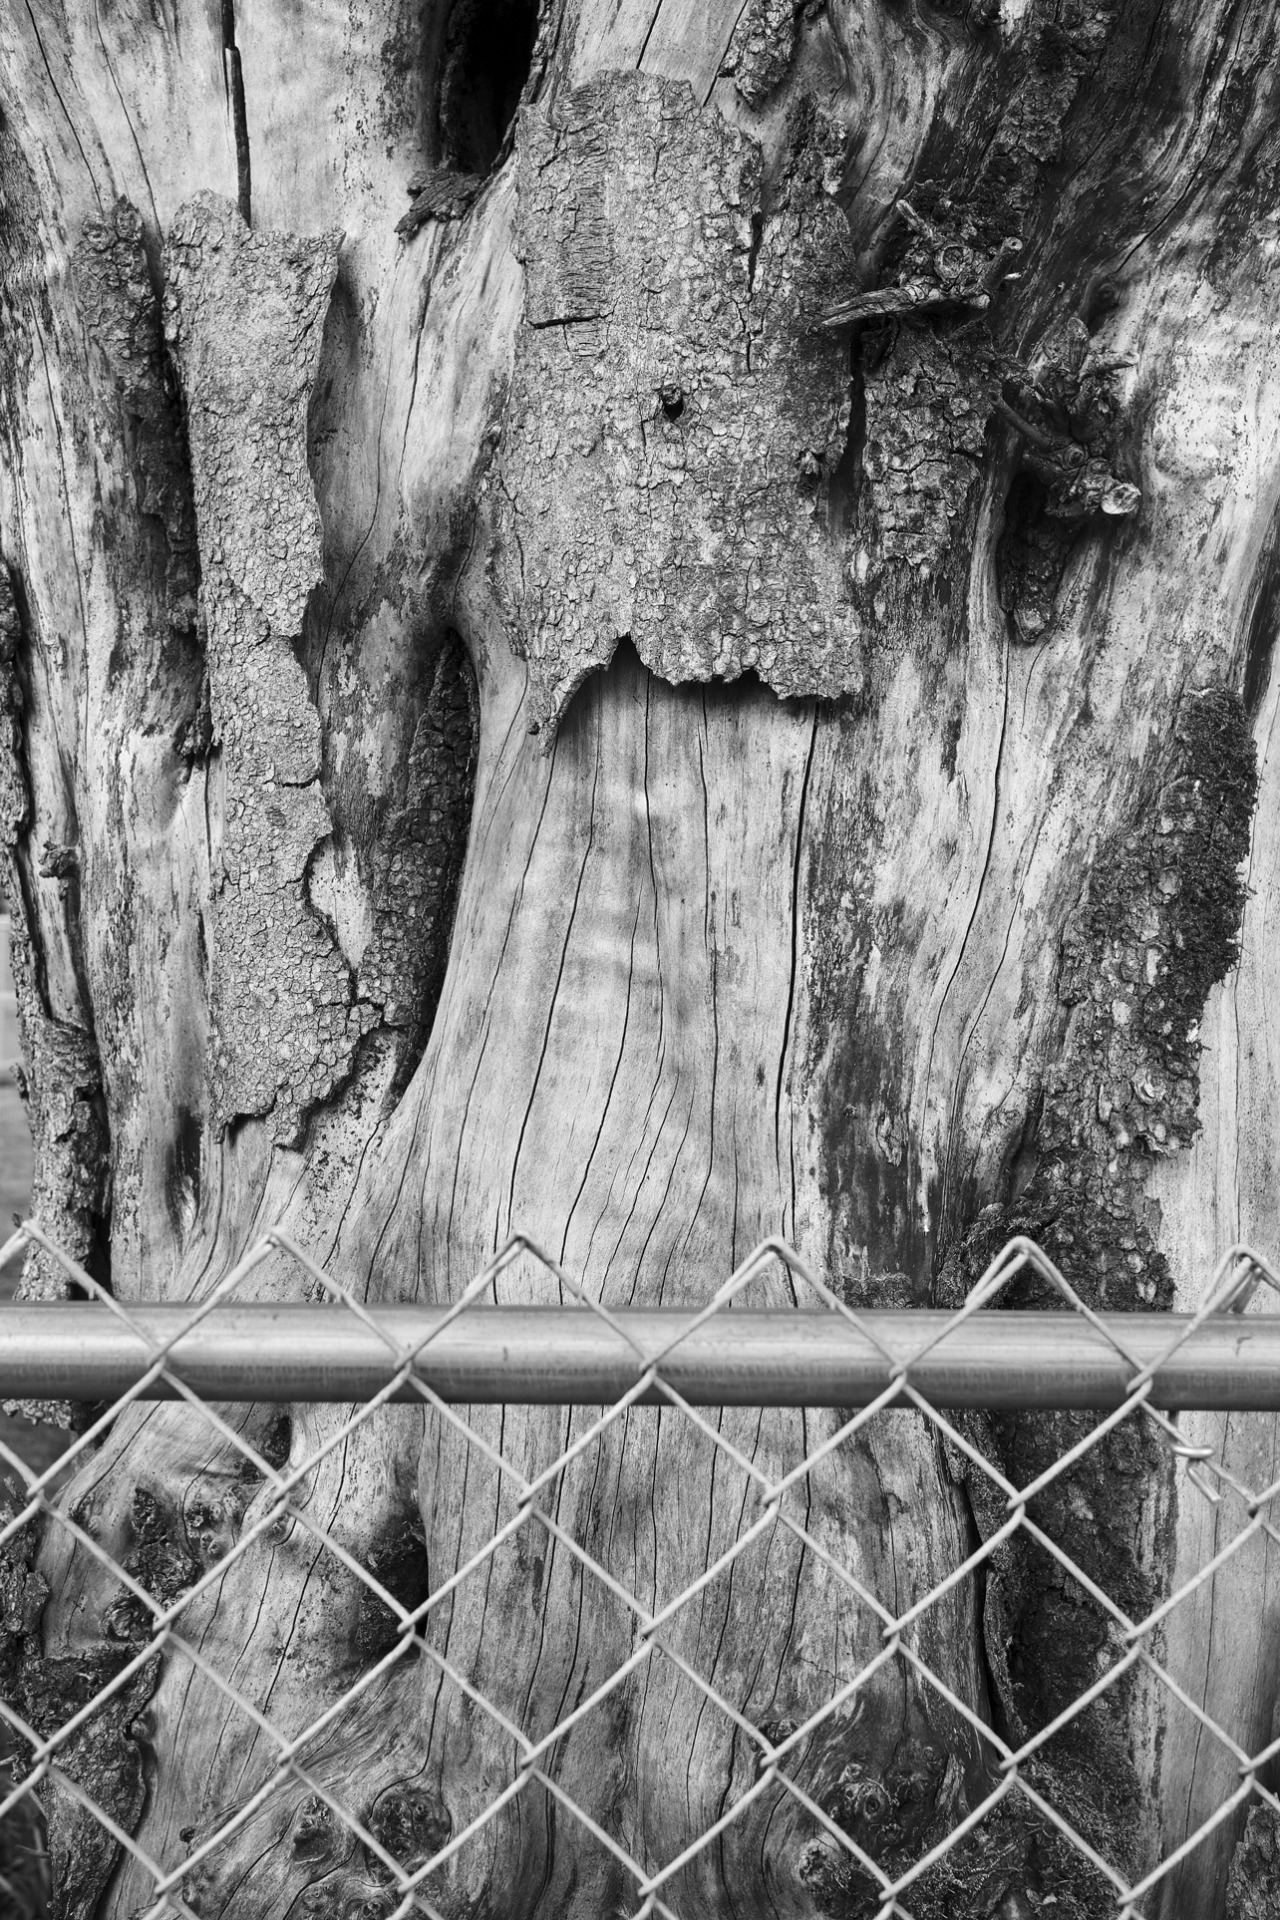 Snag, Portland, OR
© Robert Pallesen #Snag#Dead Tree#Street Scene#Fences#PDX#Portland#Urban Landscape #Black and White Photography #Robert Pallesen